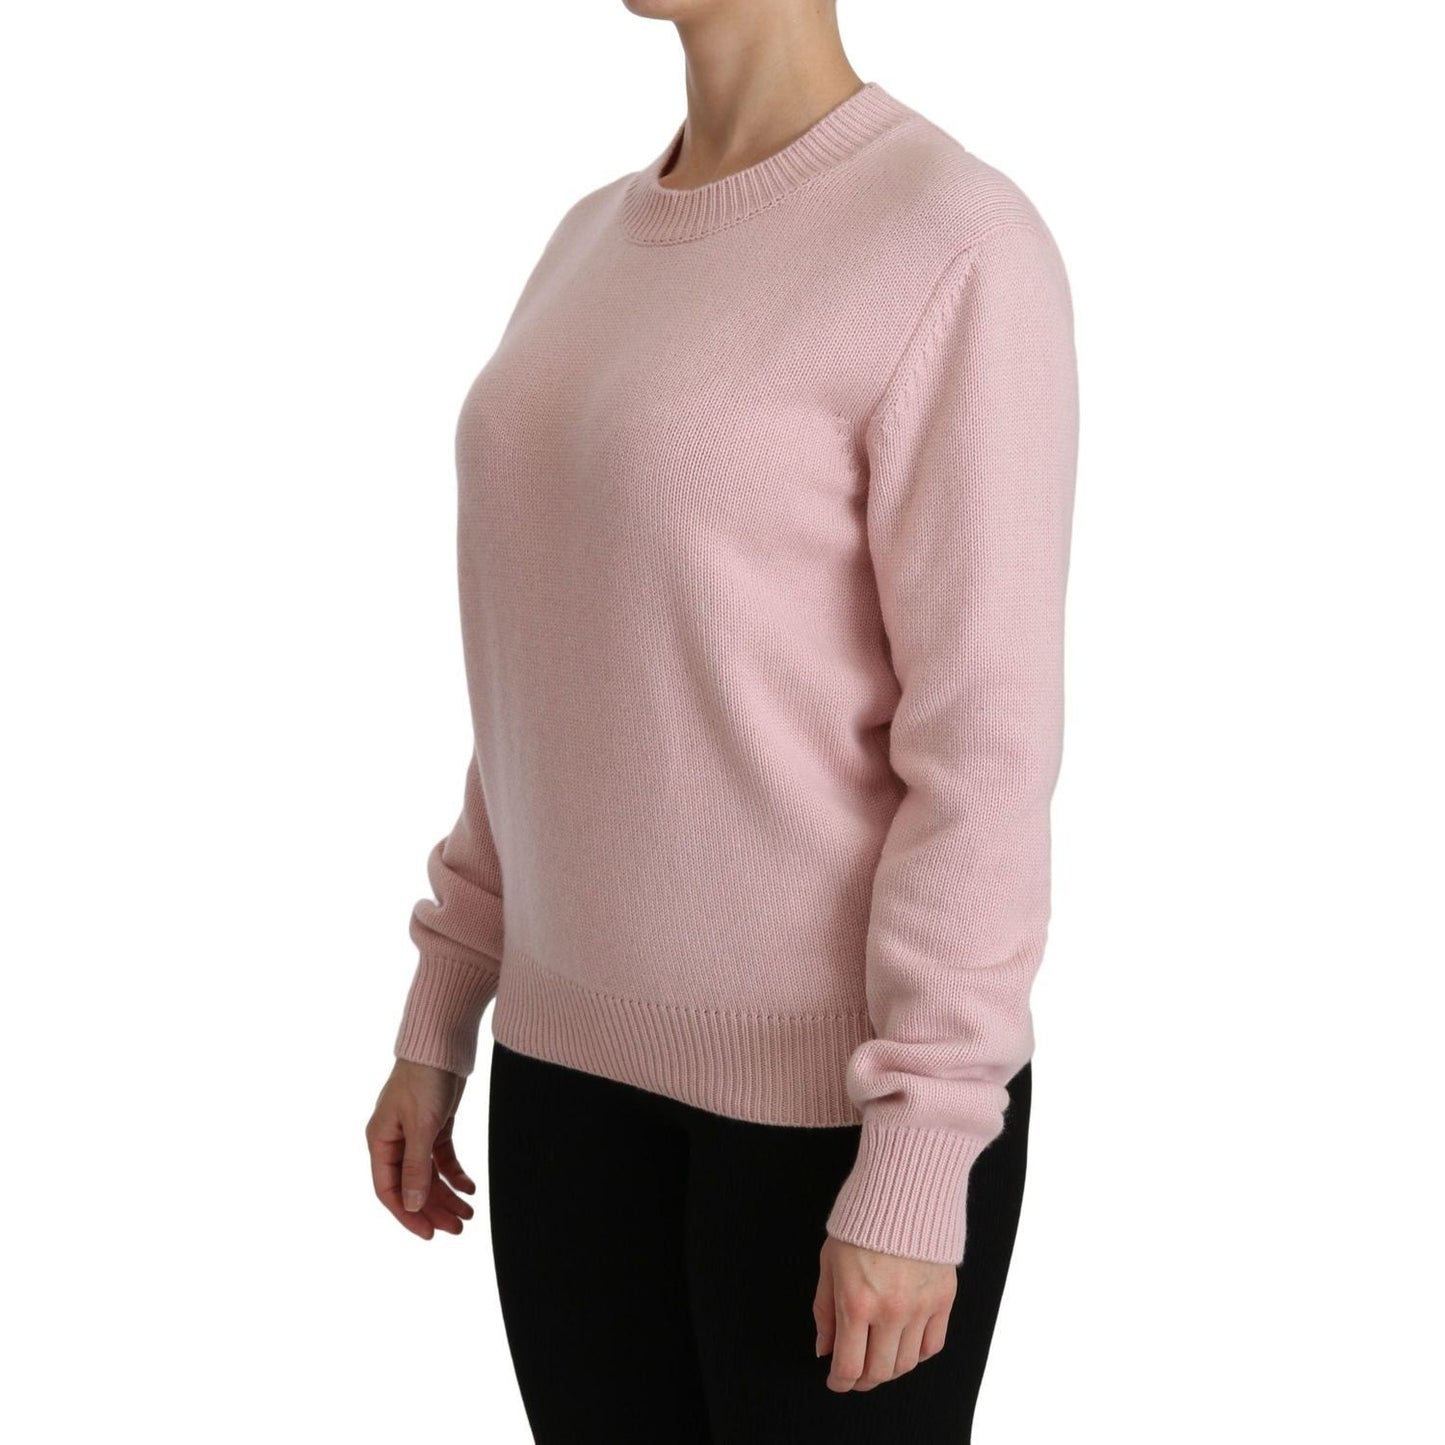 Dolce & Gabbana Cashmere-Blend Pink Crew Neck Sweater pink-crew-neck-cashmere-pullover-sweater IMG_2751-1-scaled-eca8d409-85c.jpg